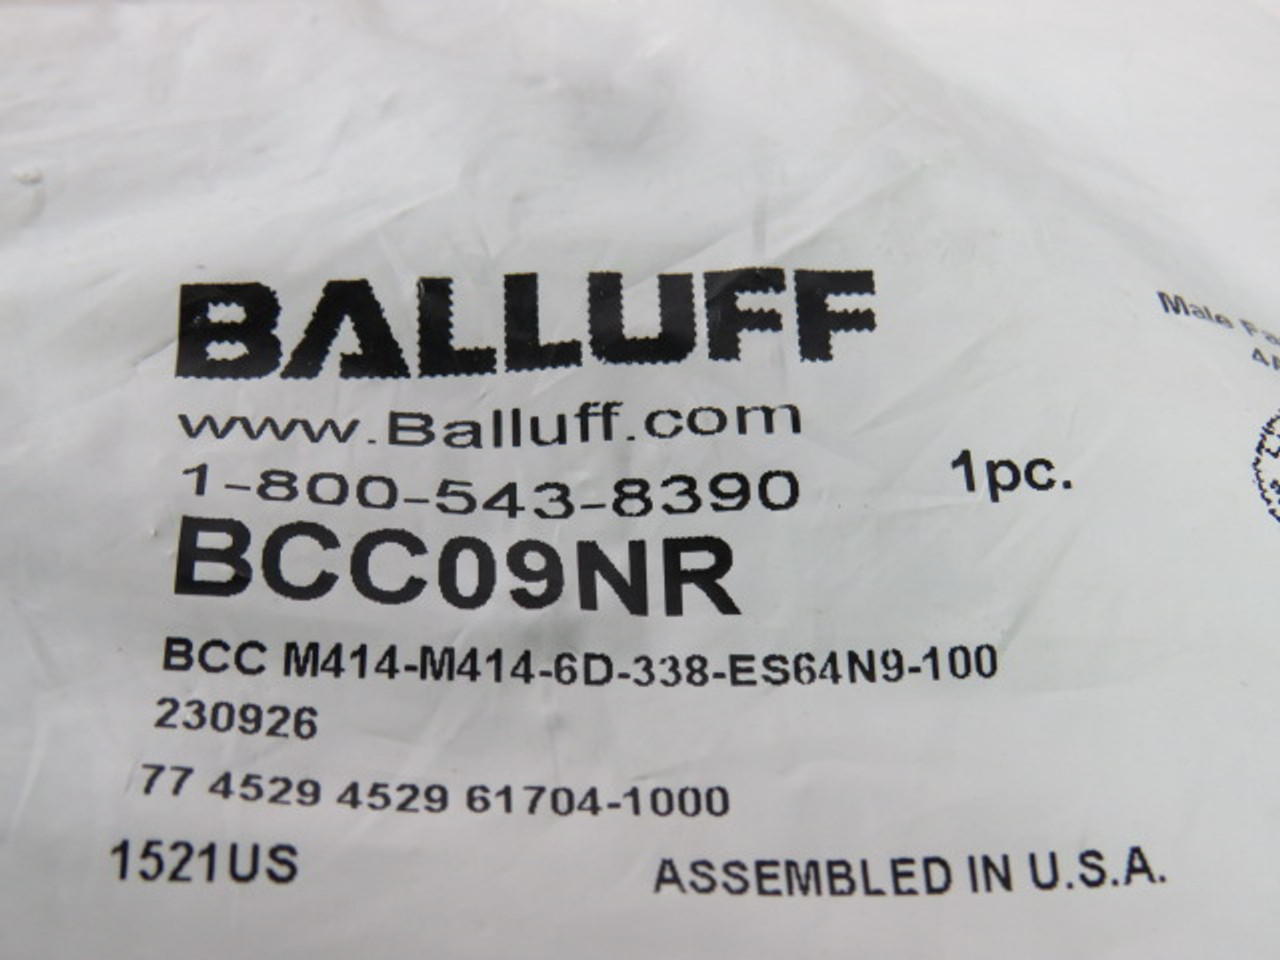 Balluff BCC09NR Double-Ended Cordset 4P 250VDC/VAC 10m NWB